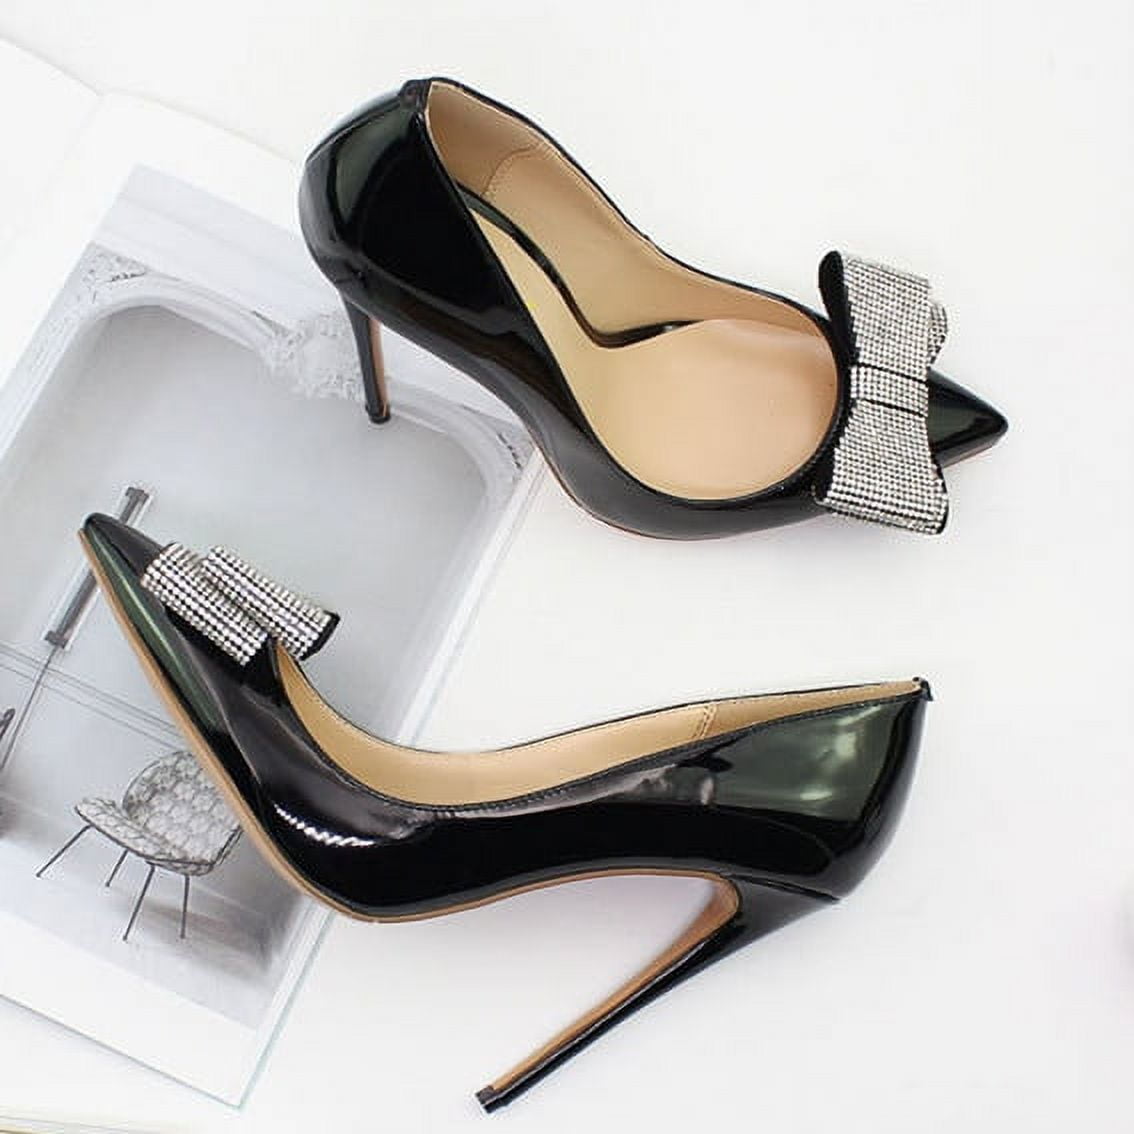 UUNDA Women Classic Pointed Toe Metallic Formal Wear Sexy High Heels  Evening Stiletto Dressy Heel Shoes